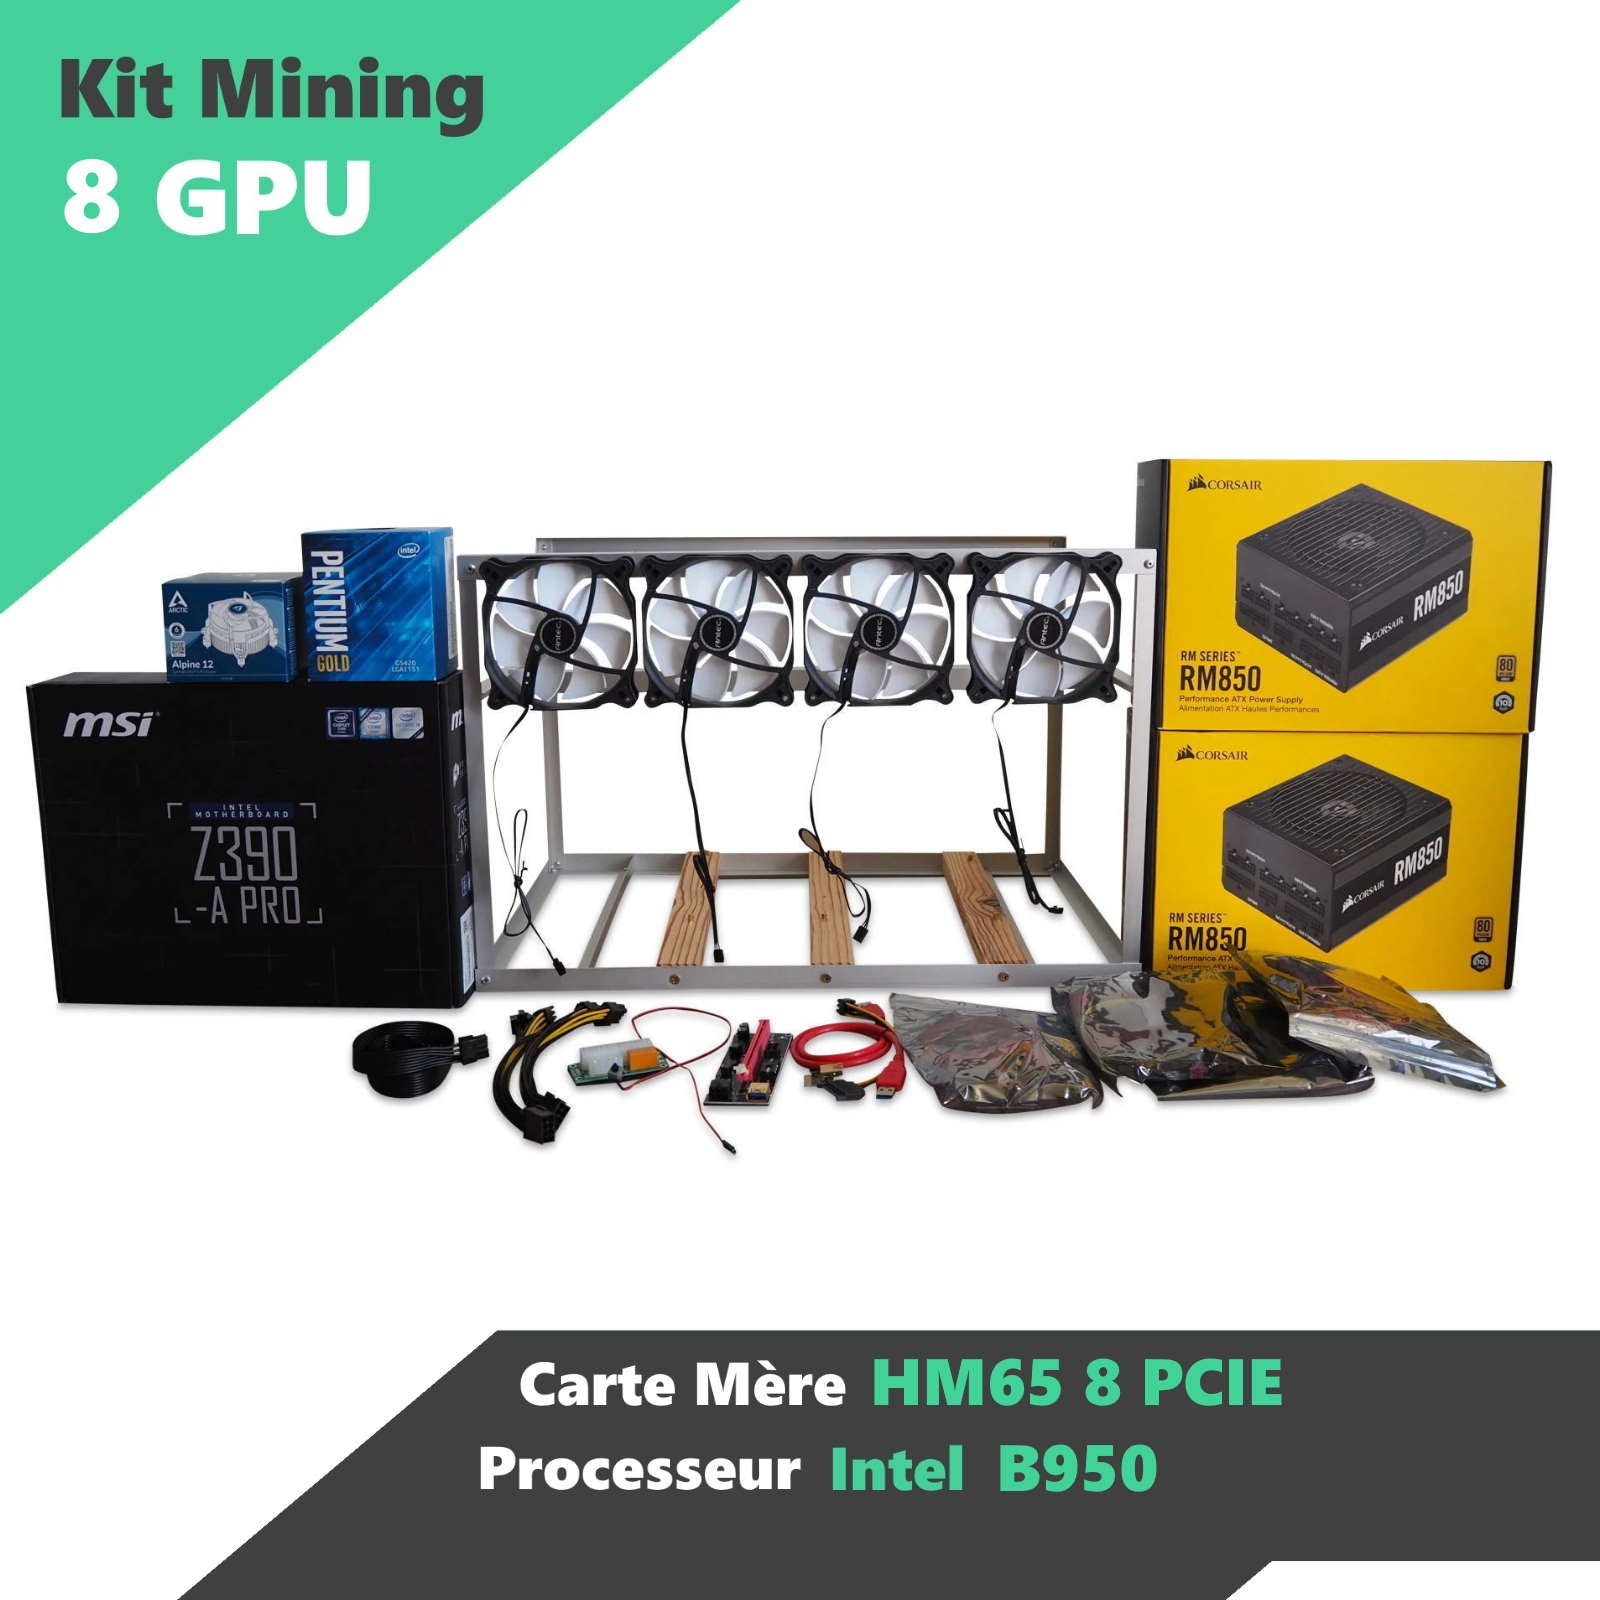 Kit Mining 8 GPU BTC-S37 Boitier Carte mère Processeur Ram – Happy Mining